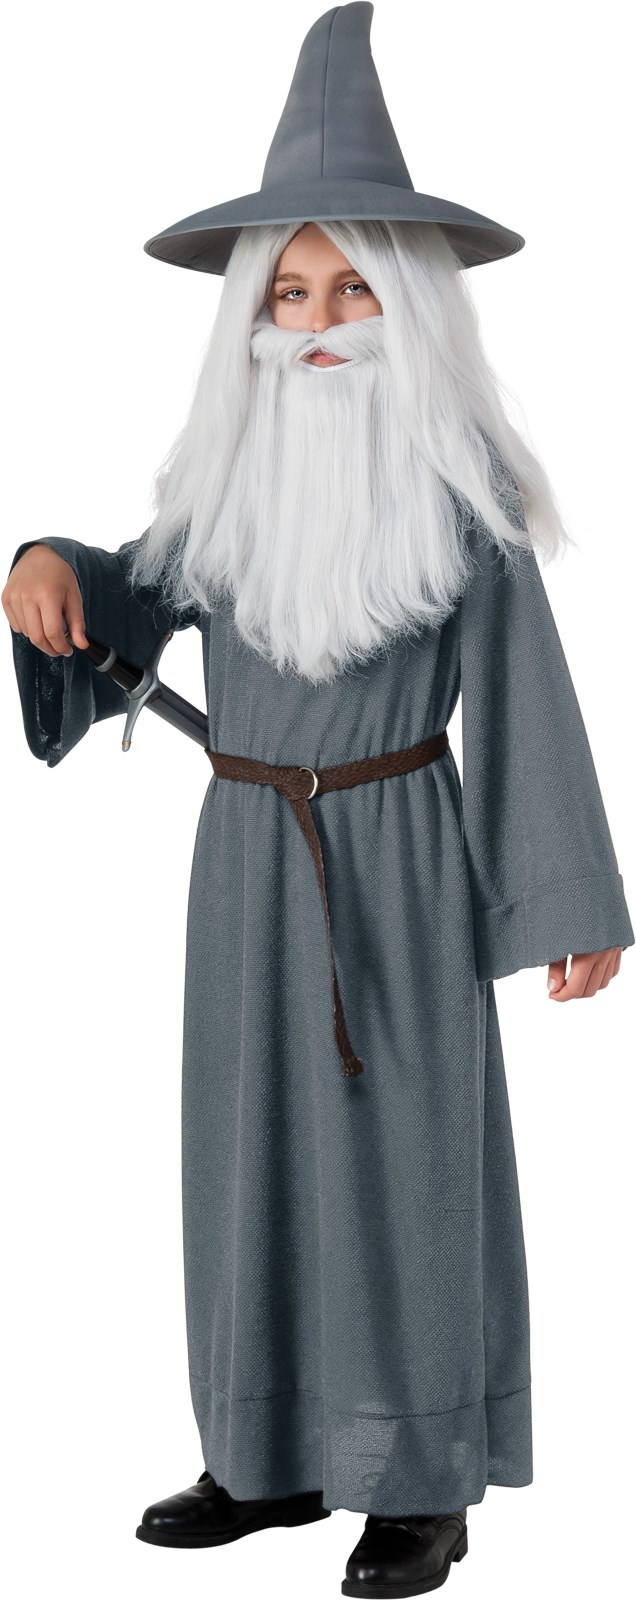 The Hobbit Gandalf Child Costume